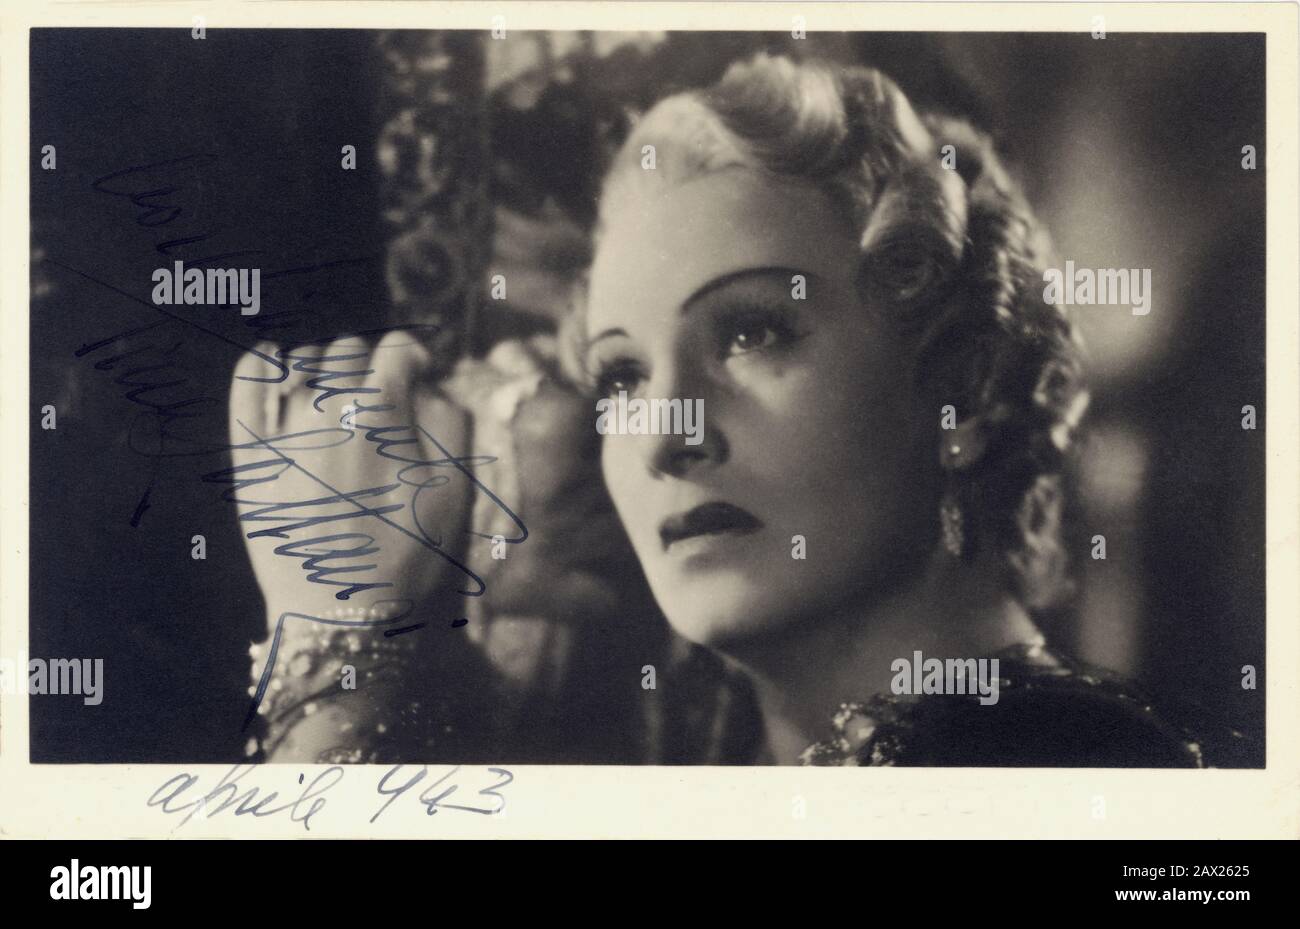 1943 , ITALIA : la actriz italiana TINA LATTANZI ( 1902 - 1997 ). Foto de Pesce . Lattanzi fue la voz de Greta Garbo , Joan Crafword y Marlene Dietrich en las ediciones italianas de películas de Hollywood . - CINE - cine - DIVA - DIVINA - retrato - ritratto - TEATRO - TEATRO - - ANNI QUARANTA - 40's - '40 - DOPPIAGGIO - DOPPIATORE - DOPPIATRICE - autografo - firma ---- Archivio GBB Foto de stock